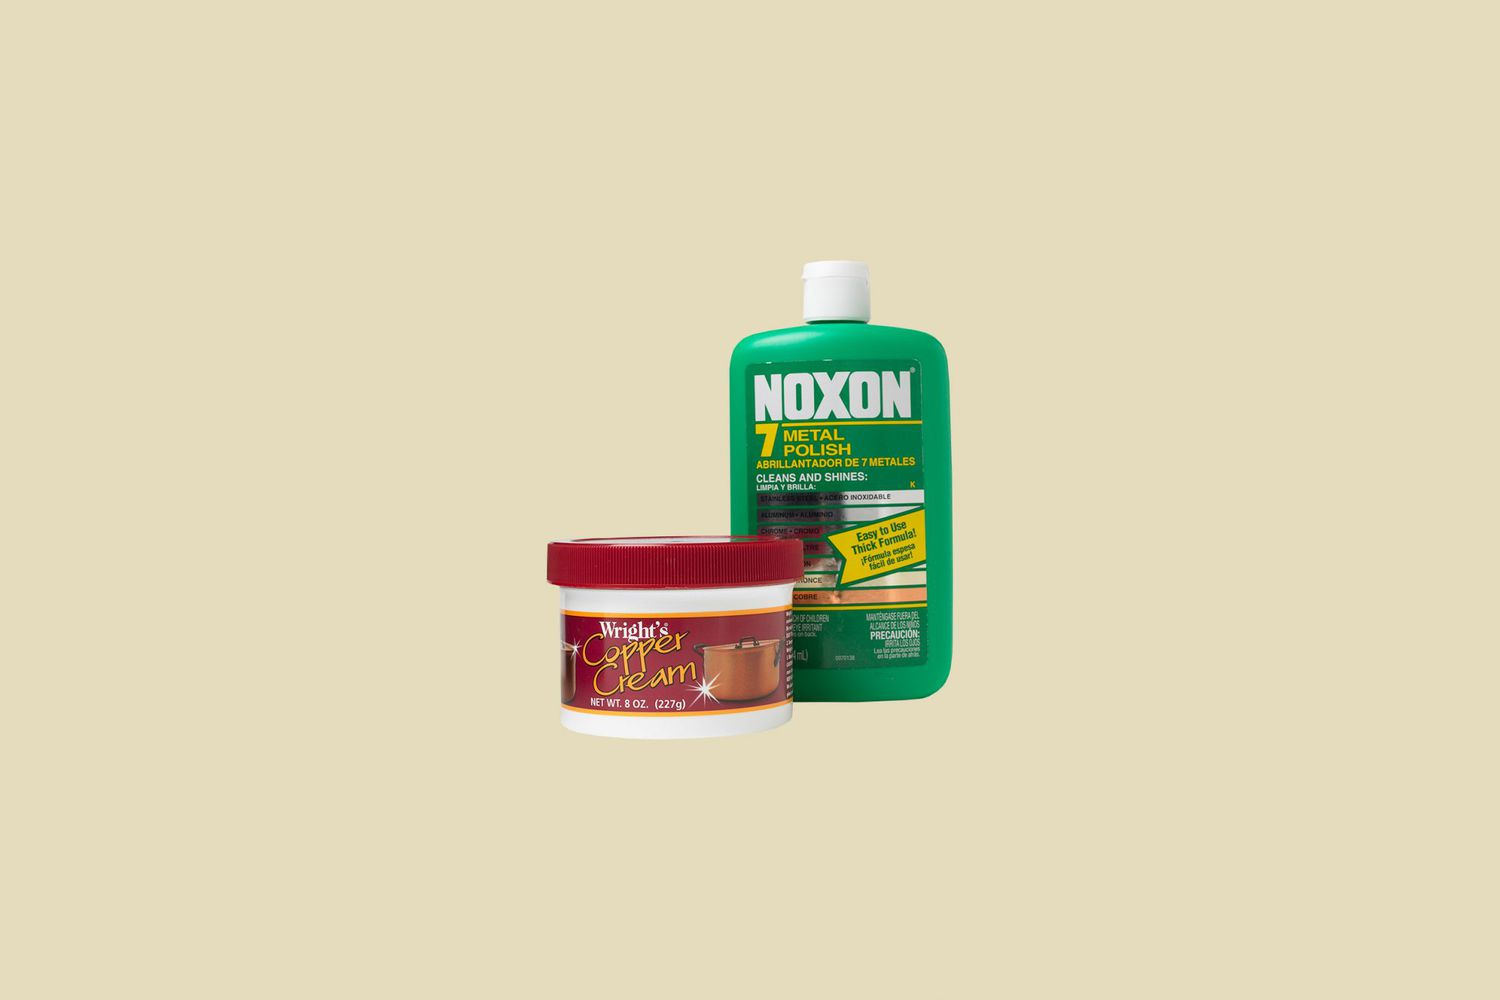 Wright's Copper Cream and Noxon 7 Liquid Metal Polish